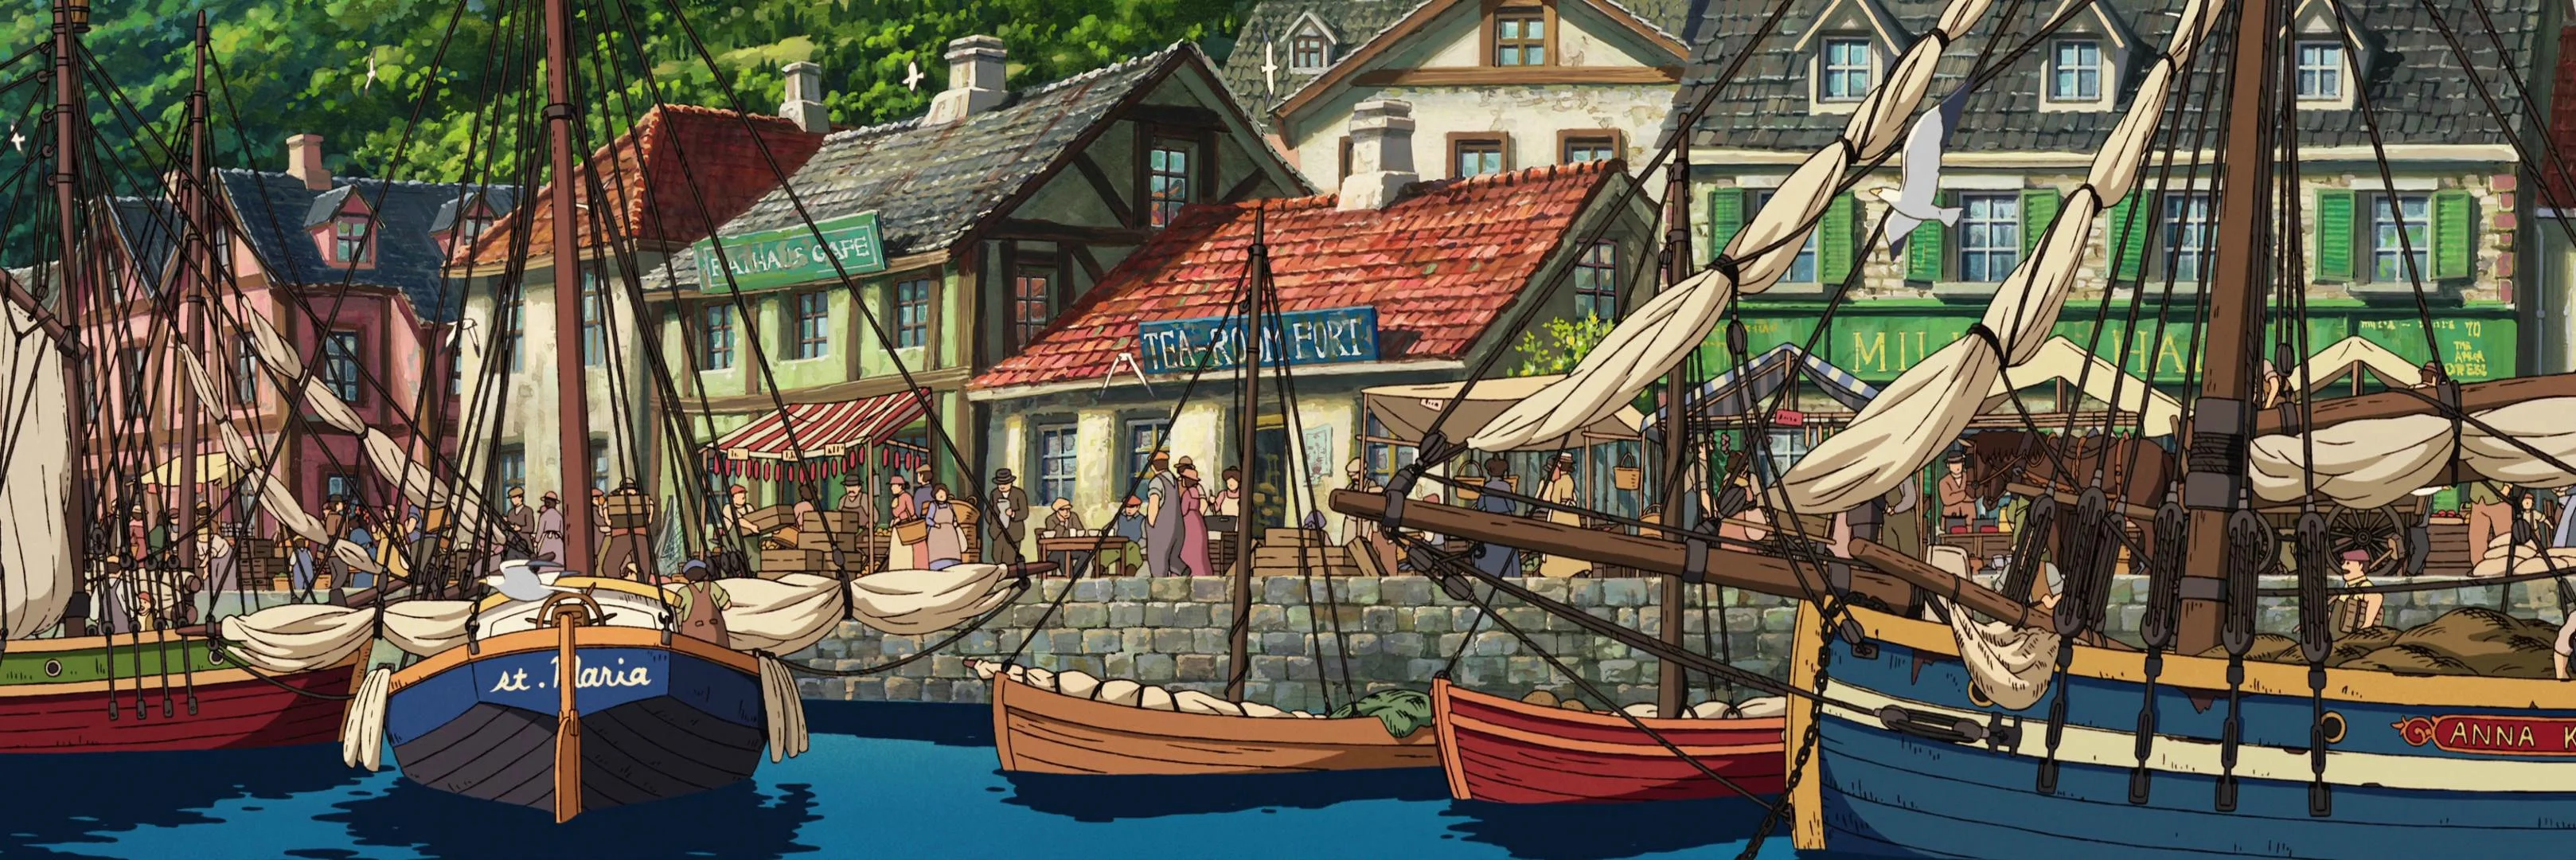 Exclusive Studio Ghibli Background